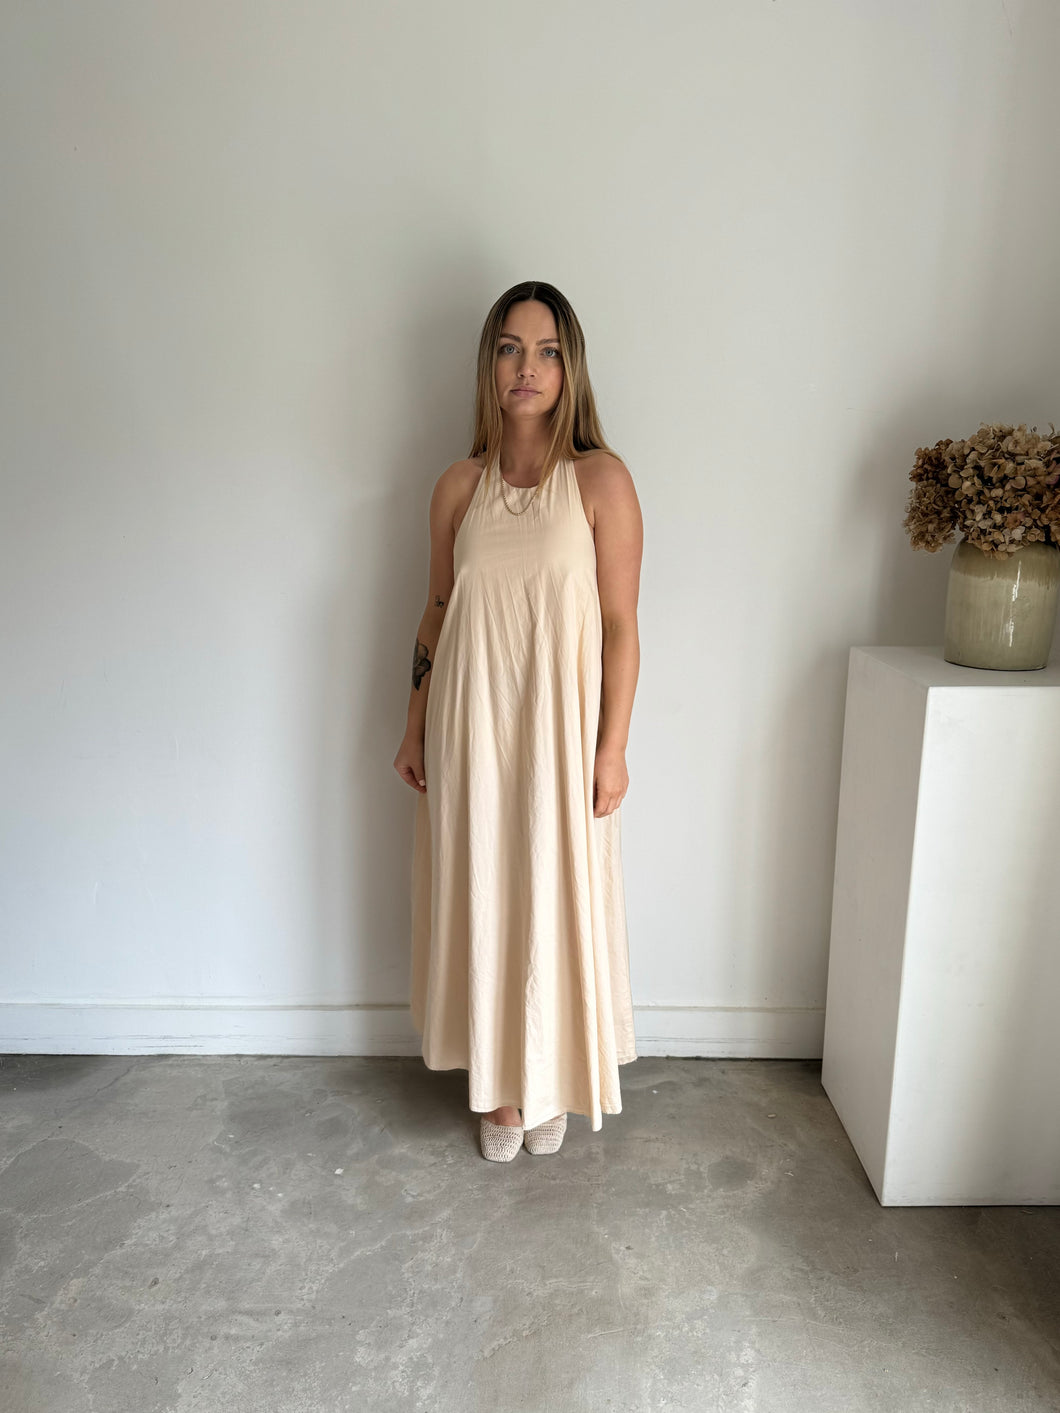 Zara Halter Neck Dress - S